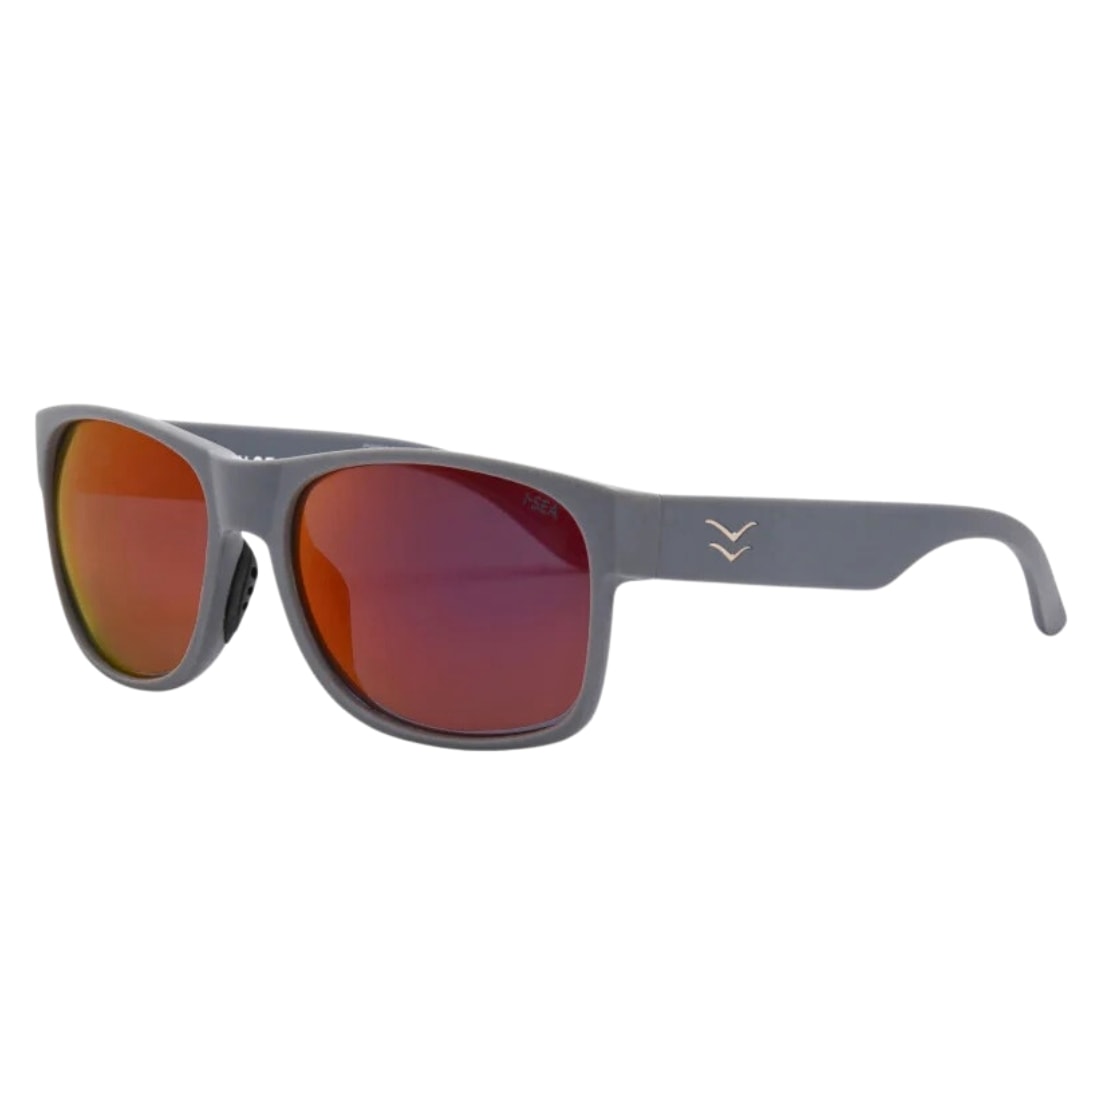 I-Sea Seven Seas Polarised Sunglasses - Matte Grey/Red - Square/Rectangular Sunglasses by I-Sea